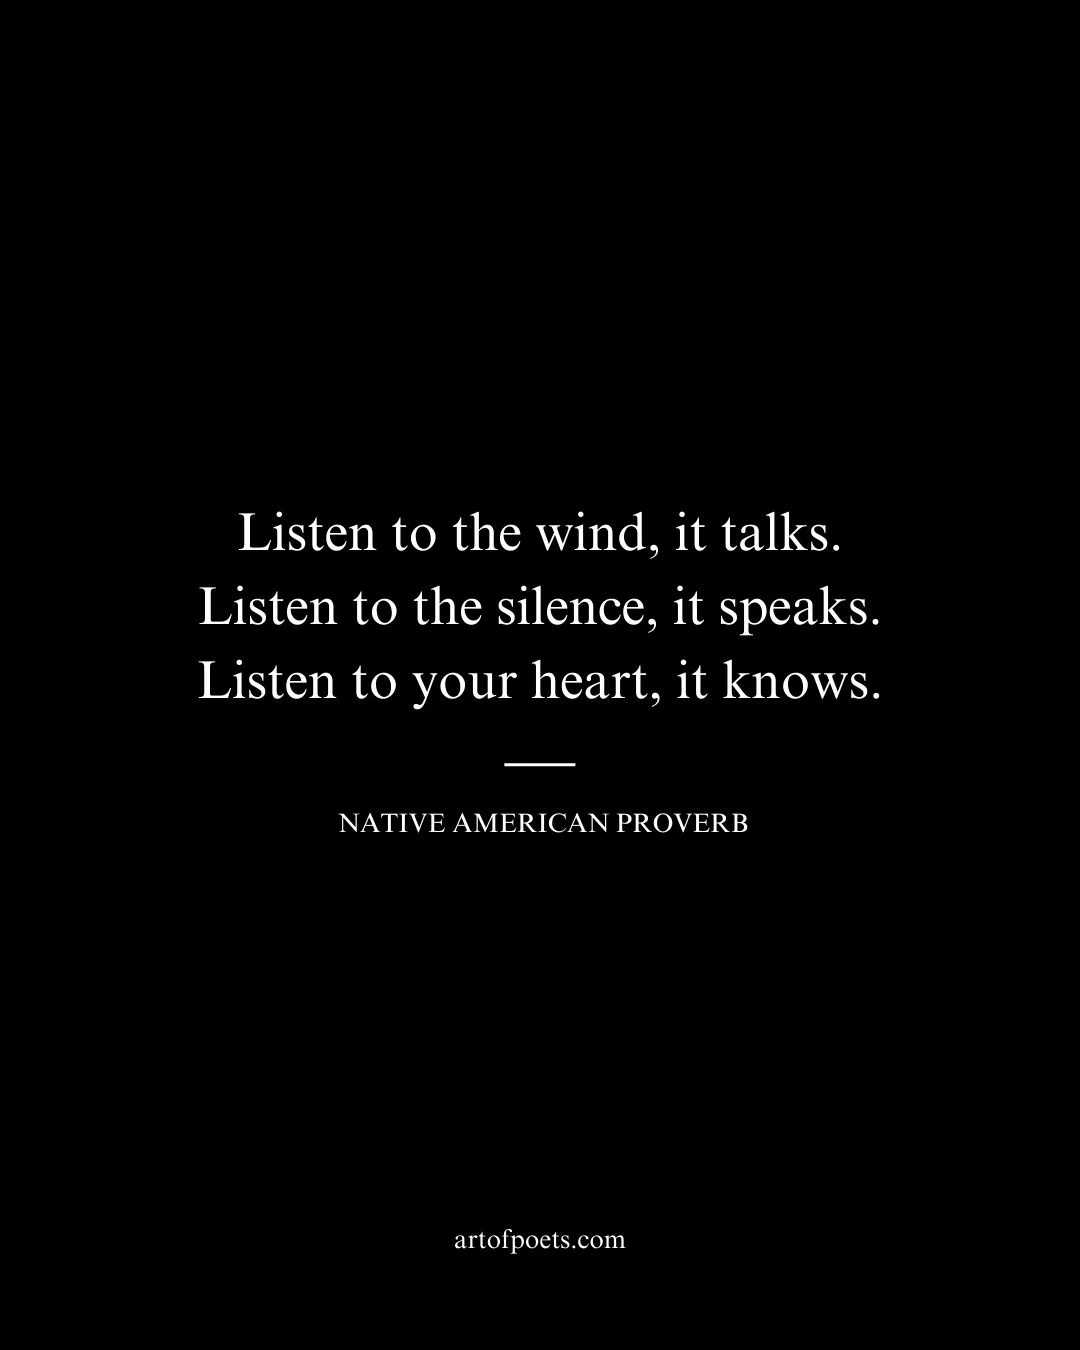 Listen to the wind it talks. Listen to the silence it speaks. Listen to your heart it knows